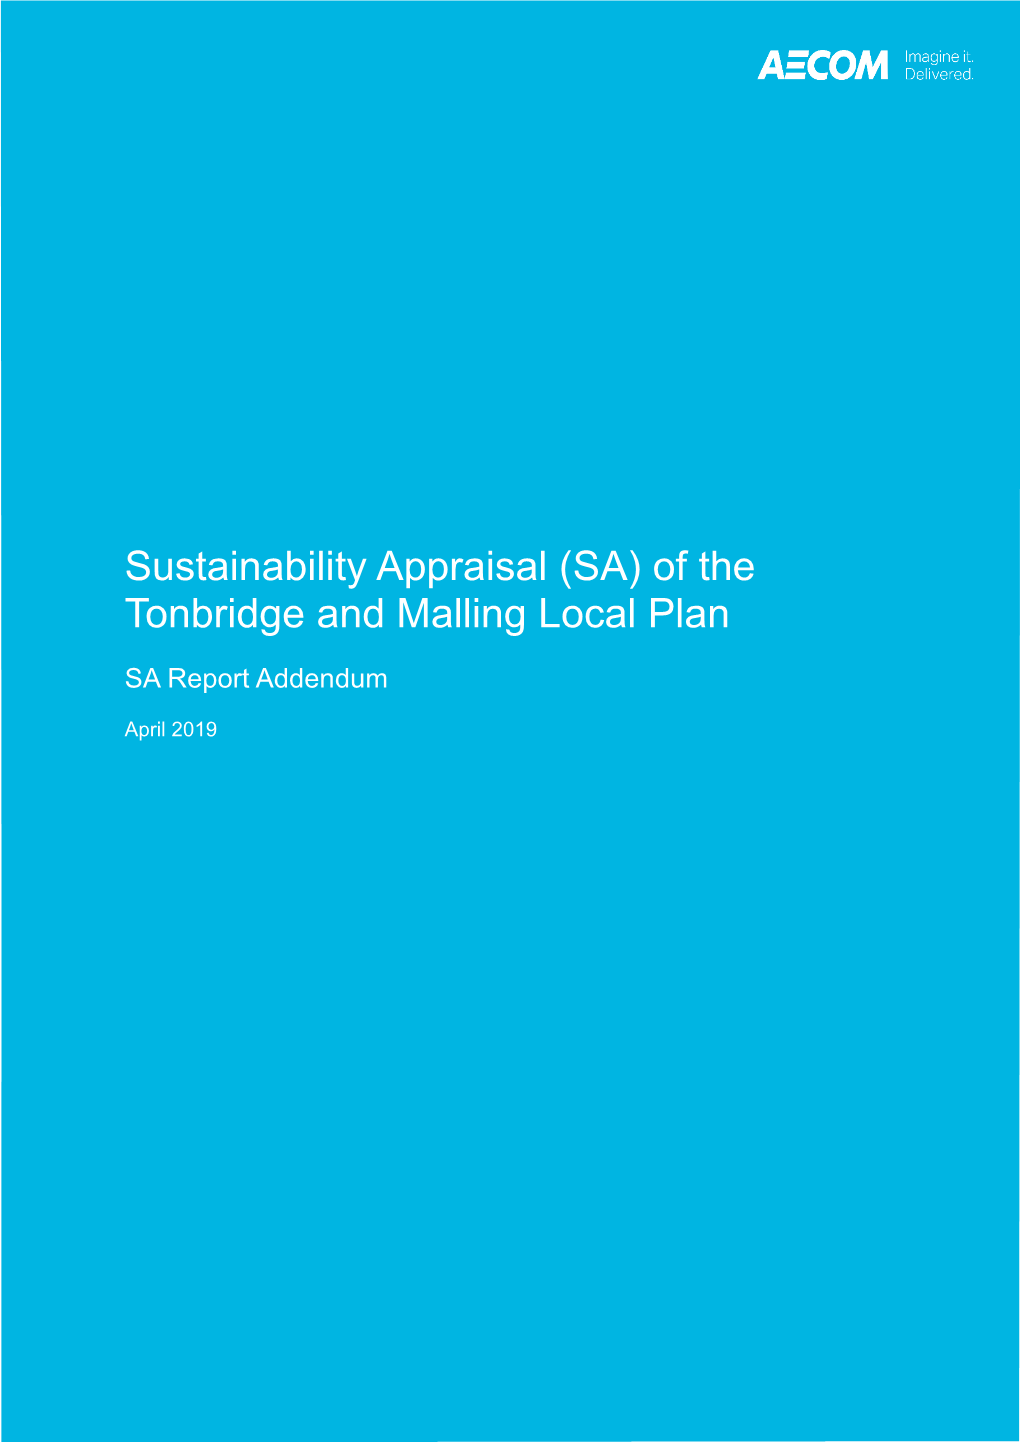 April 2019 Sustainability Appraisal Report Addendum